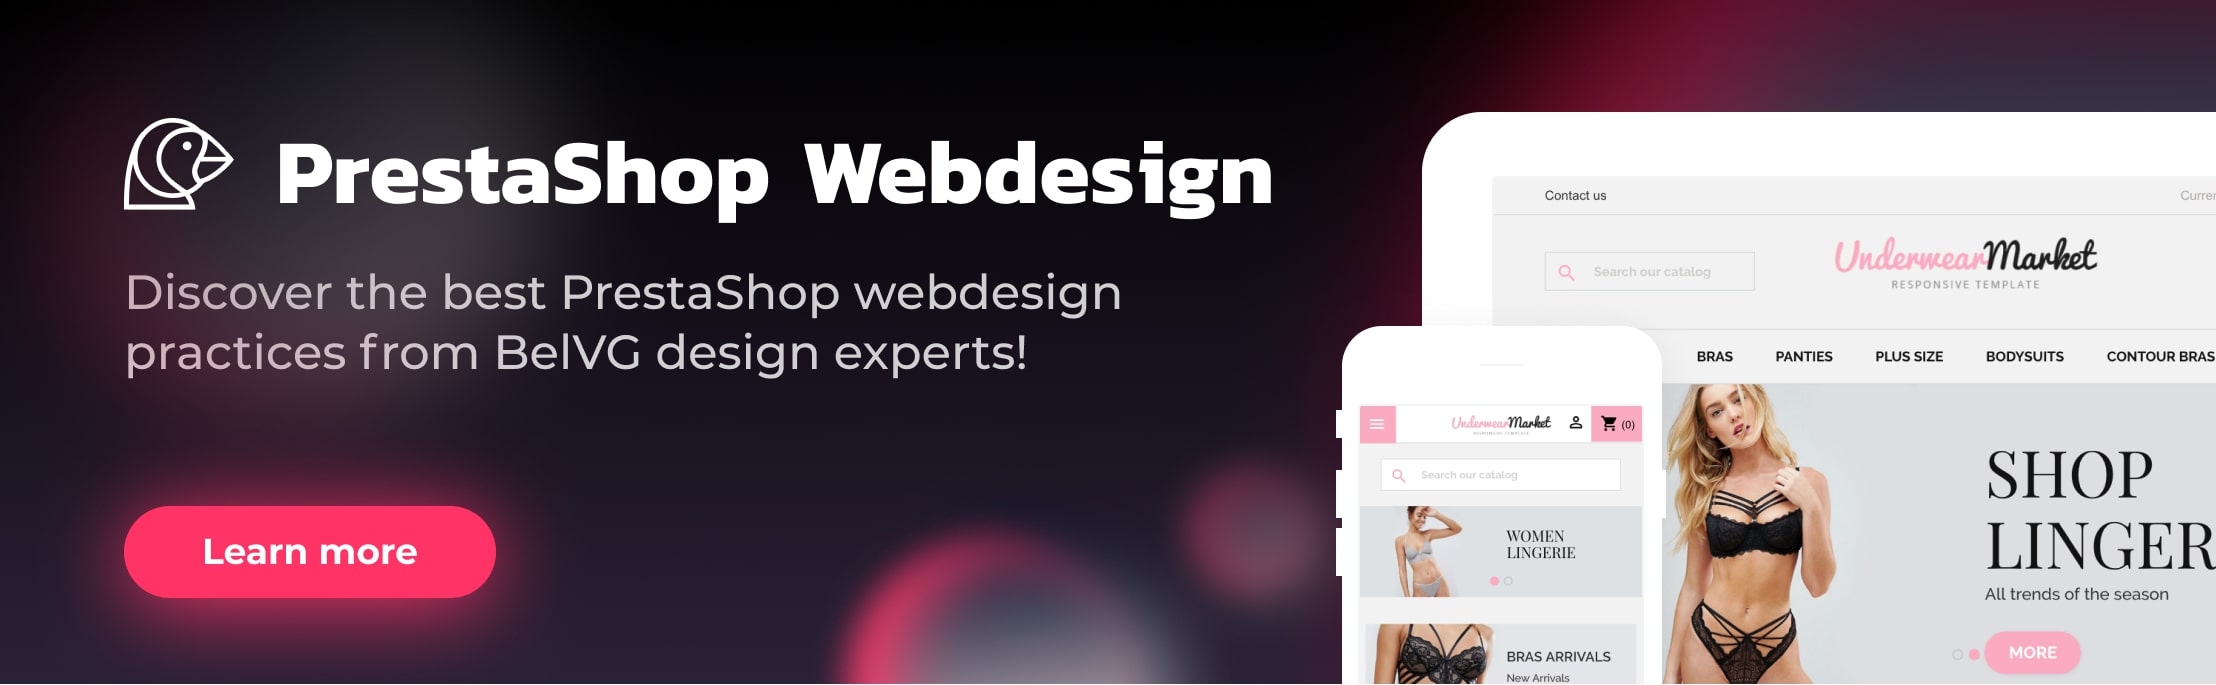 PrestaShop Webdesign